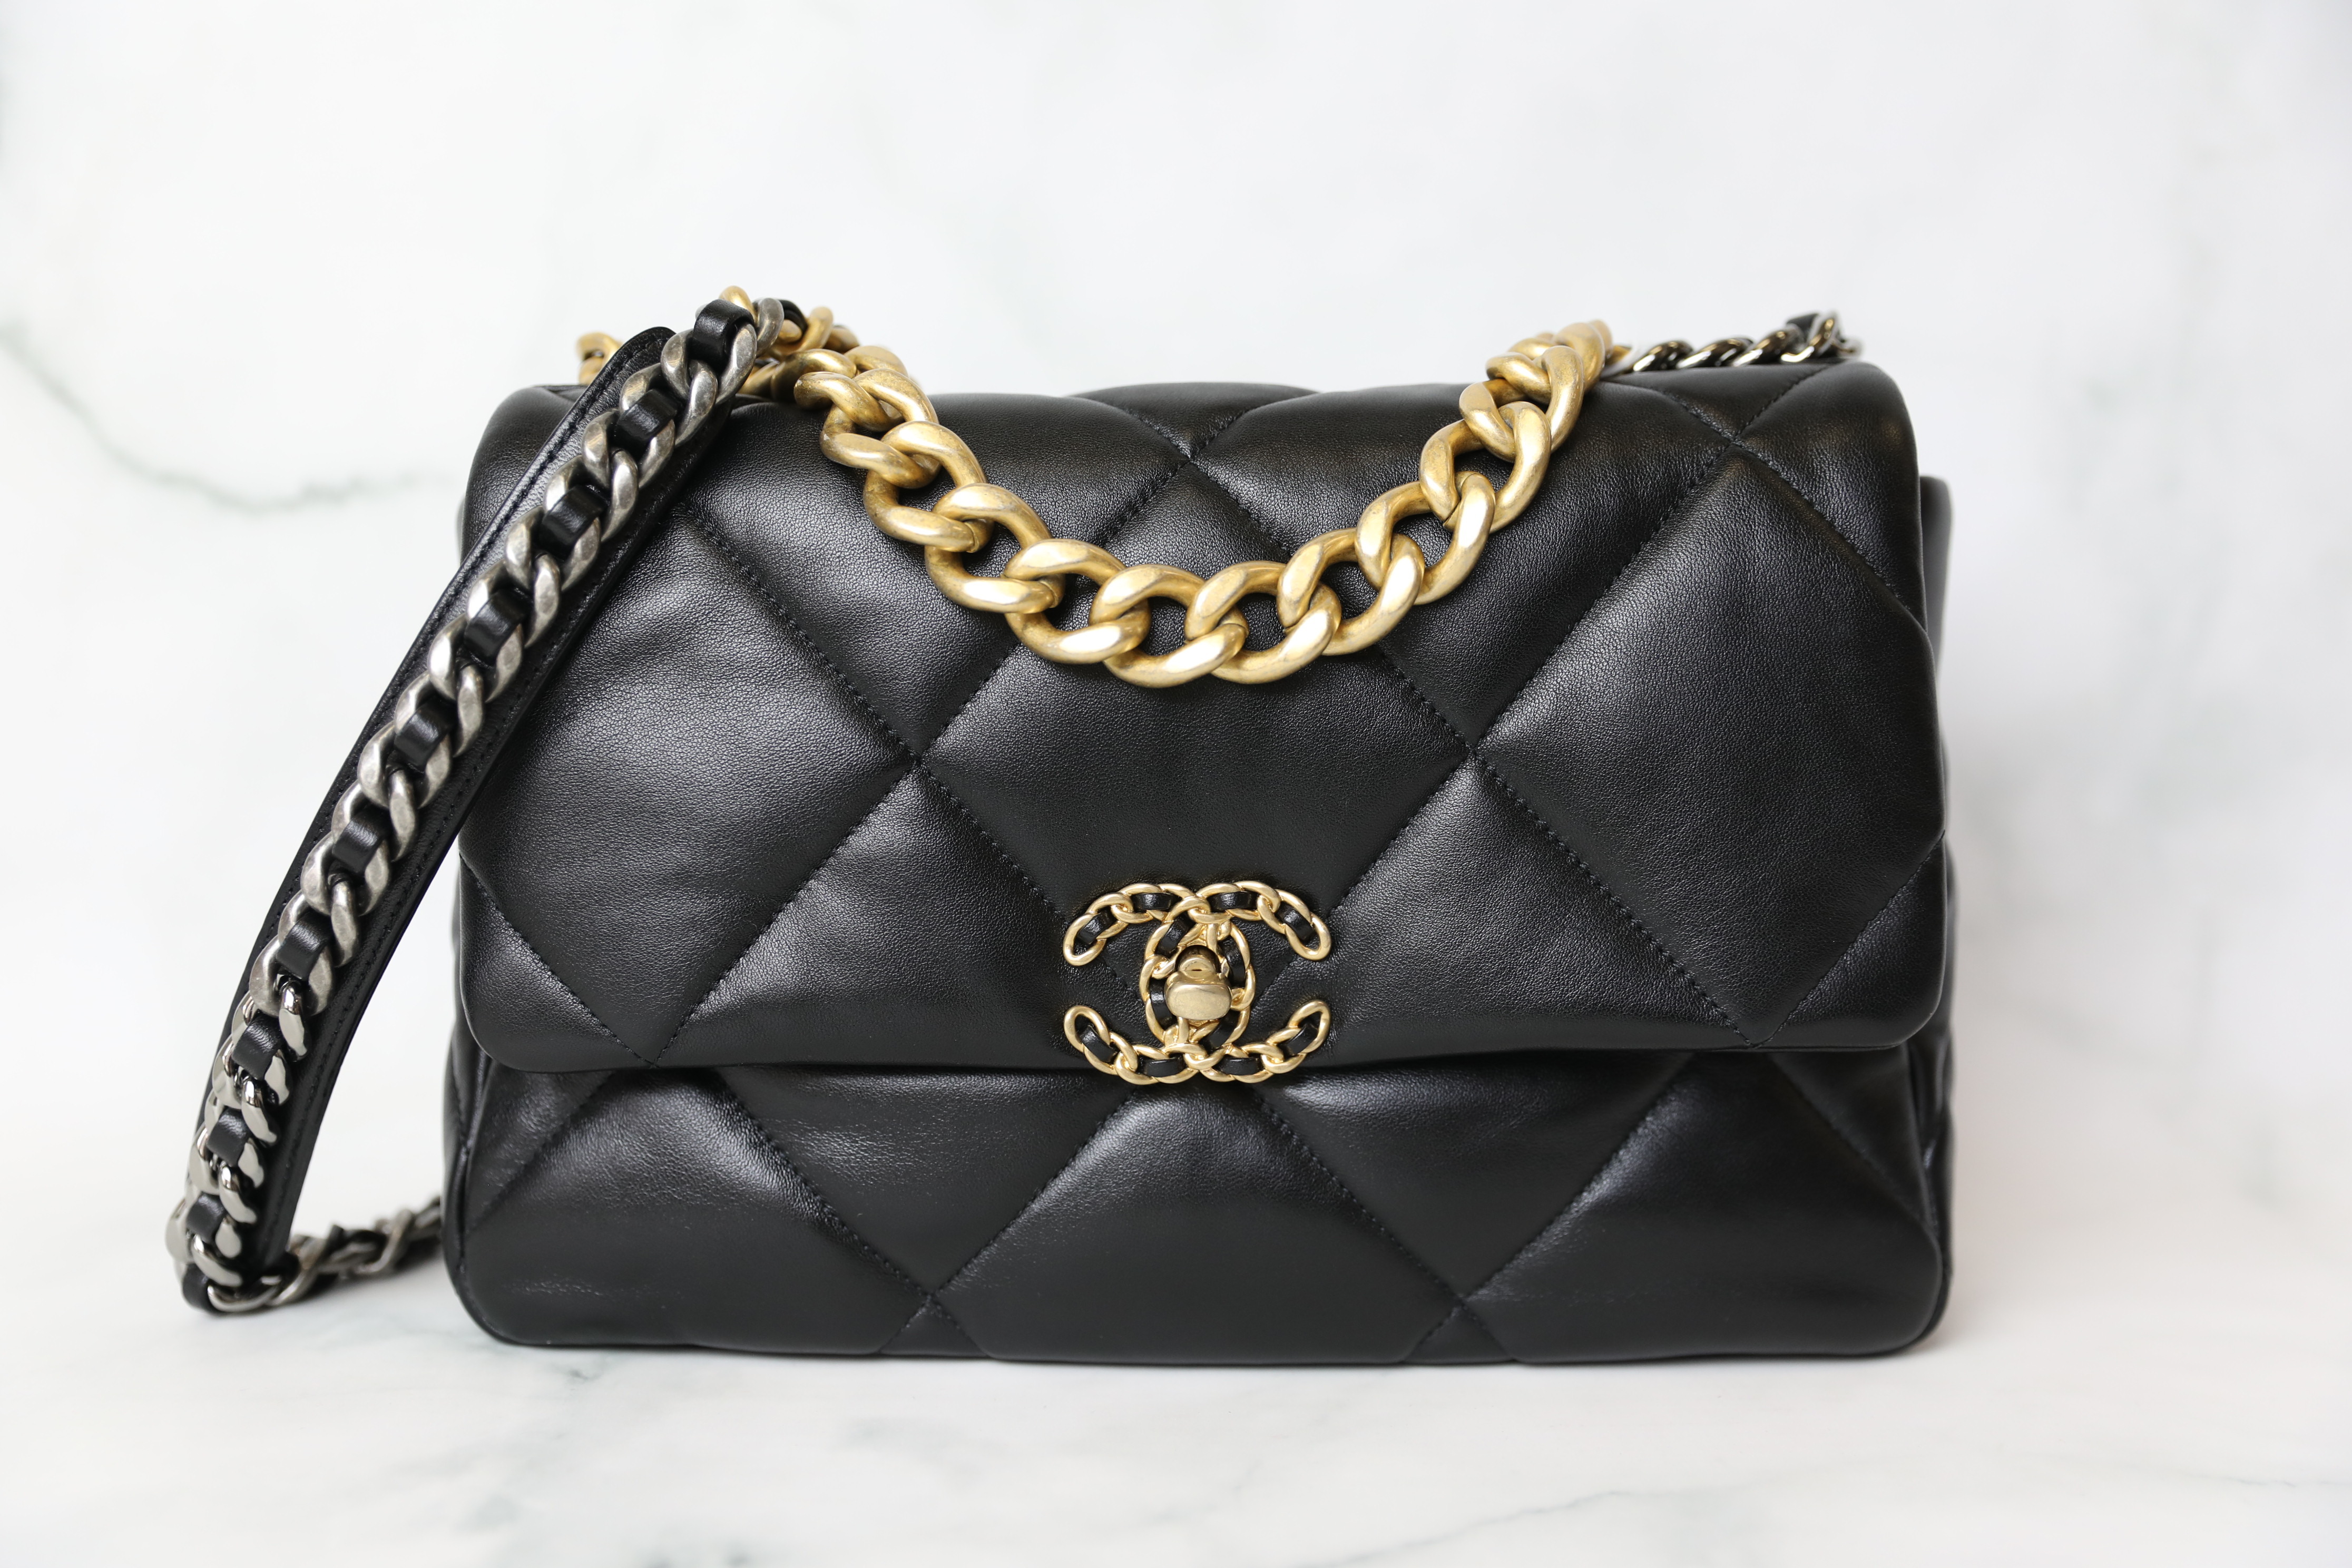 Chanel 19 Chanel Handbags for Women - Vestiaire Collective